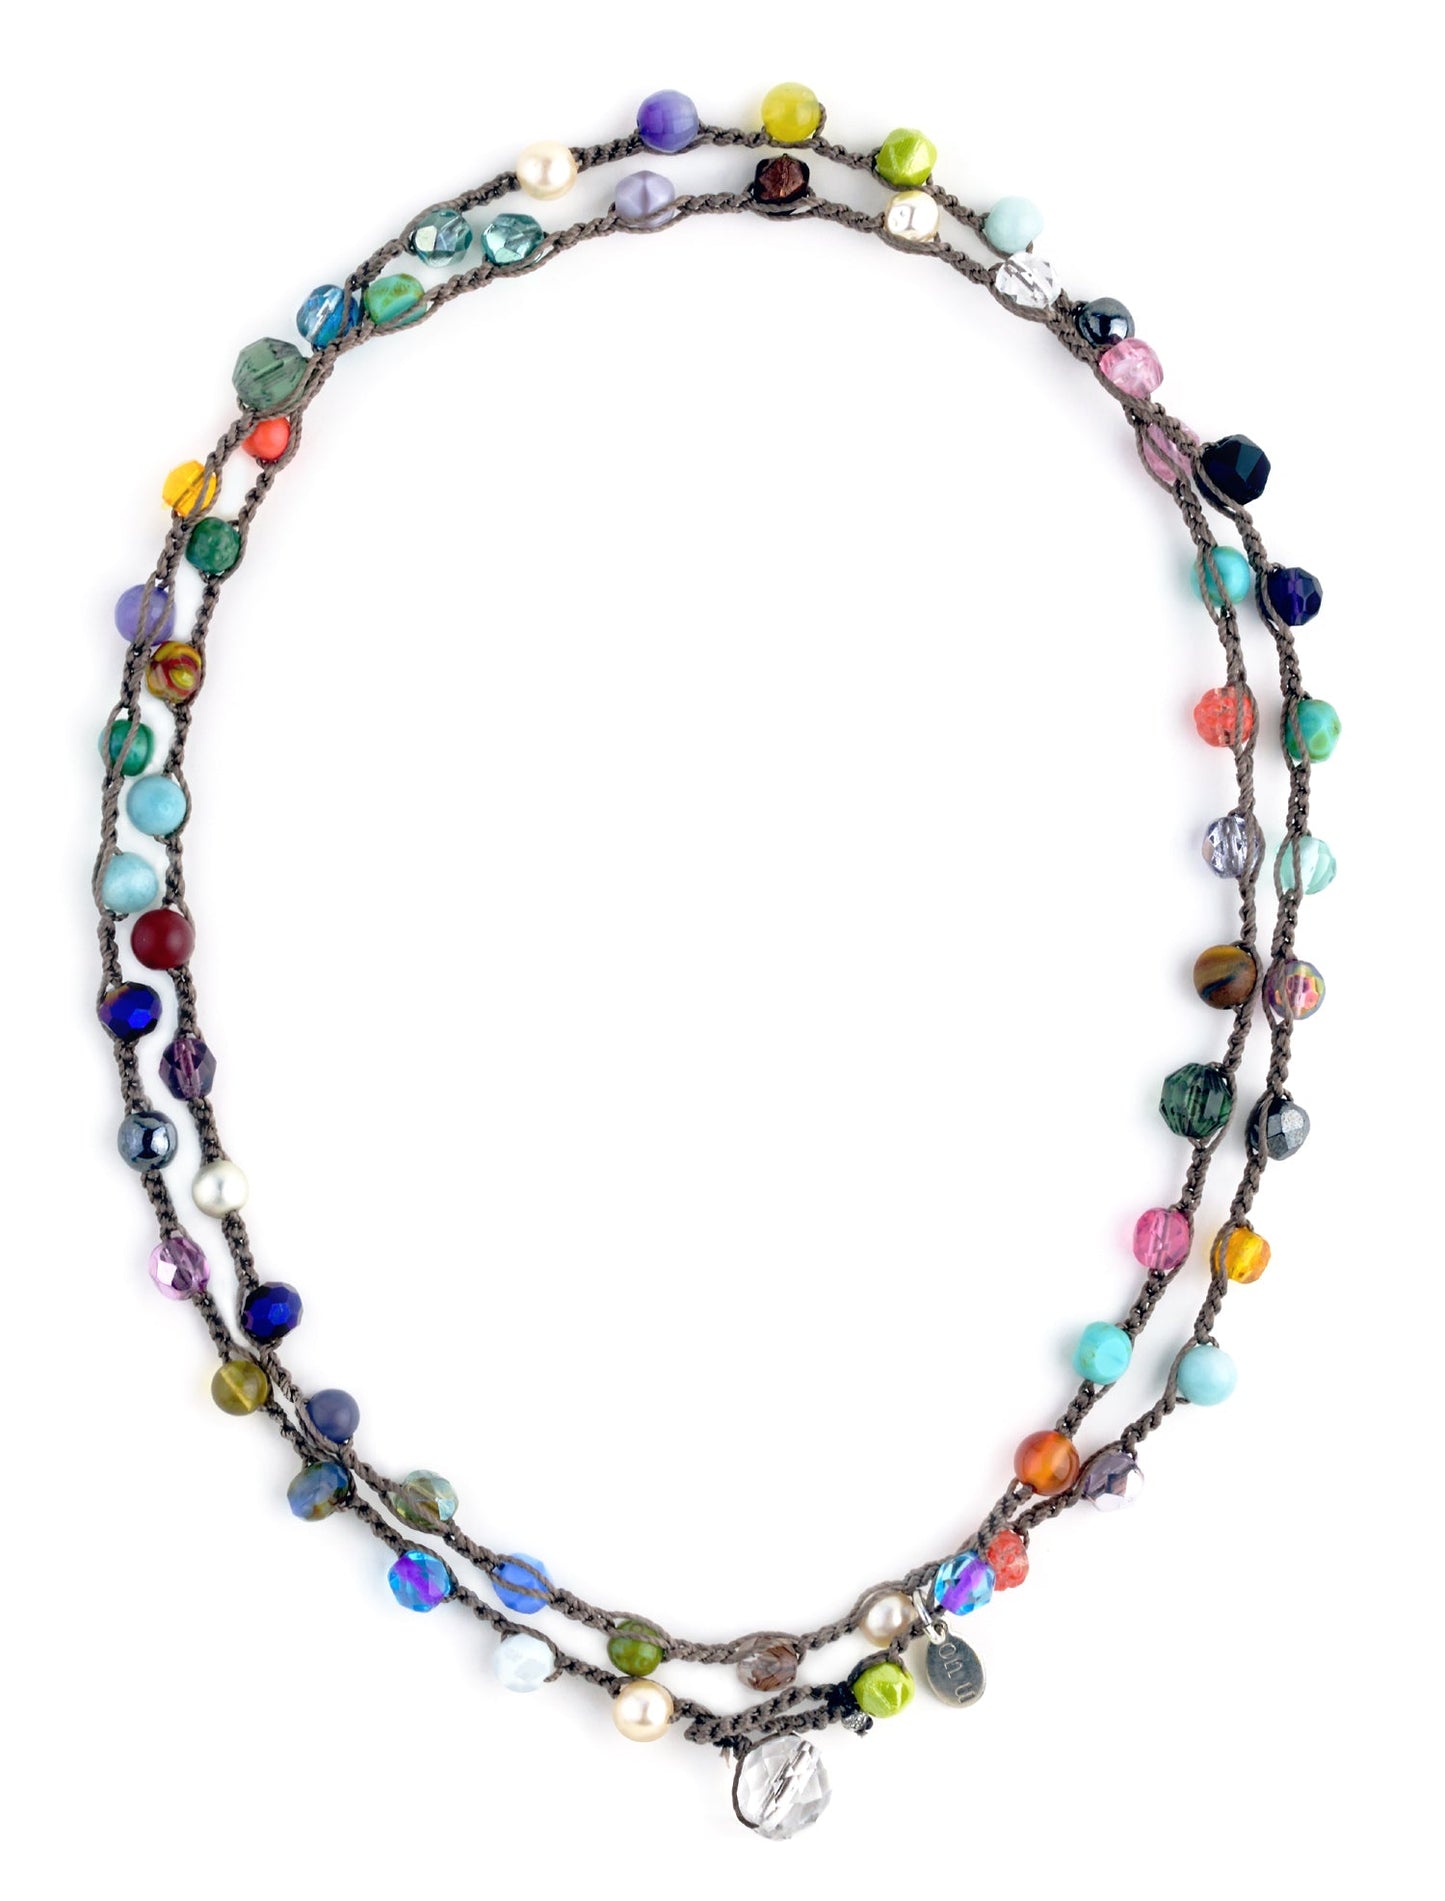 24/7 Necklace - Multi - Large Bead - On U Jewelry